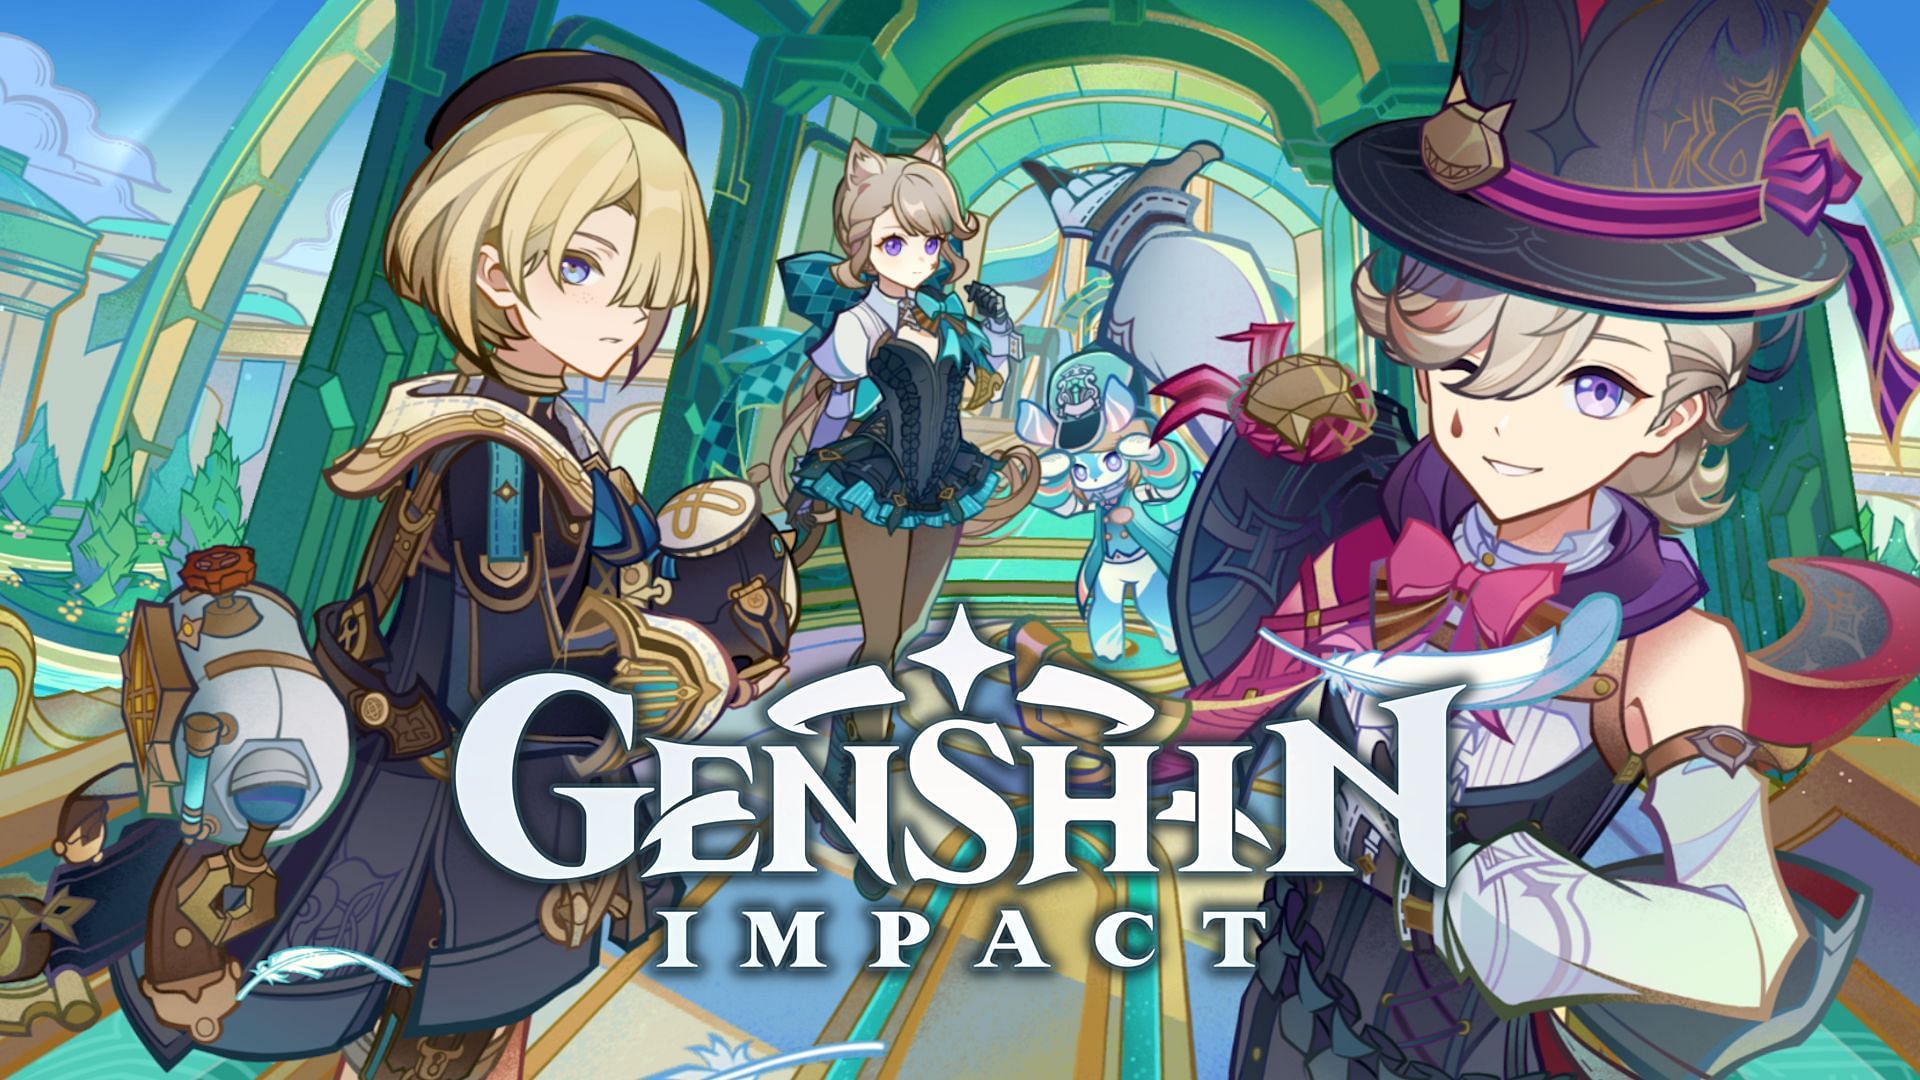 Genshin Impact 4.0 free character: Finally, anyone can play as a 4